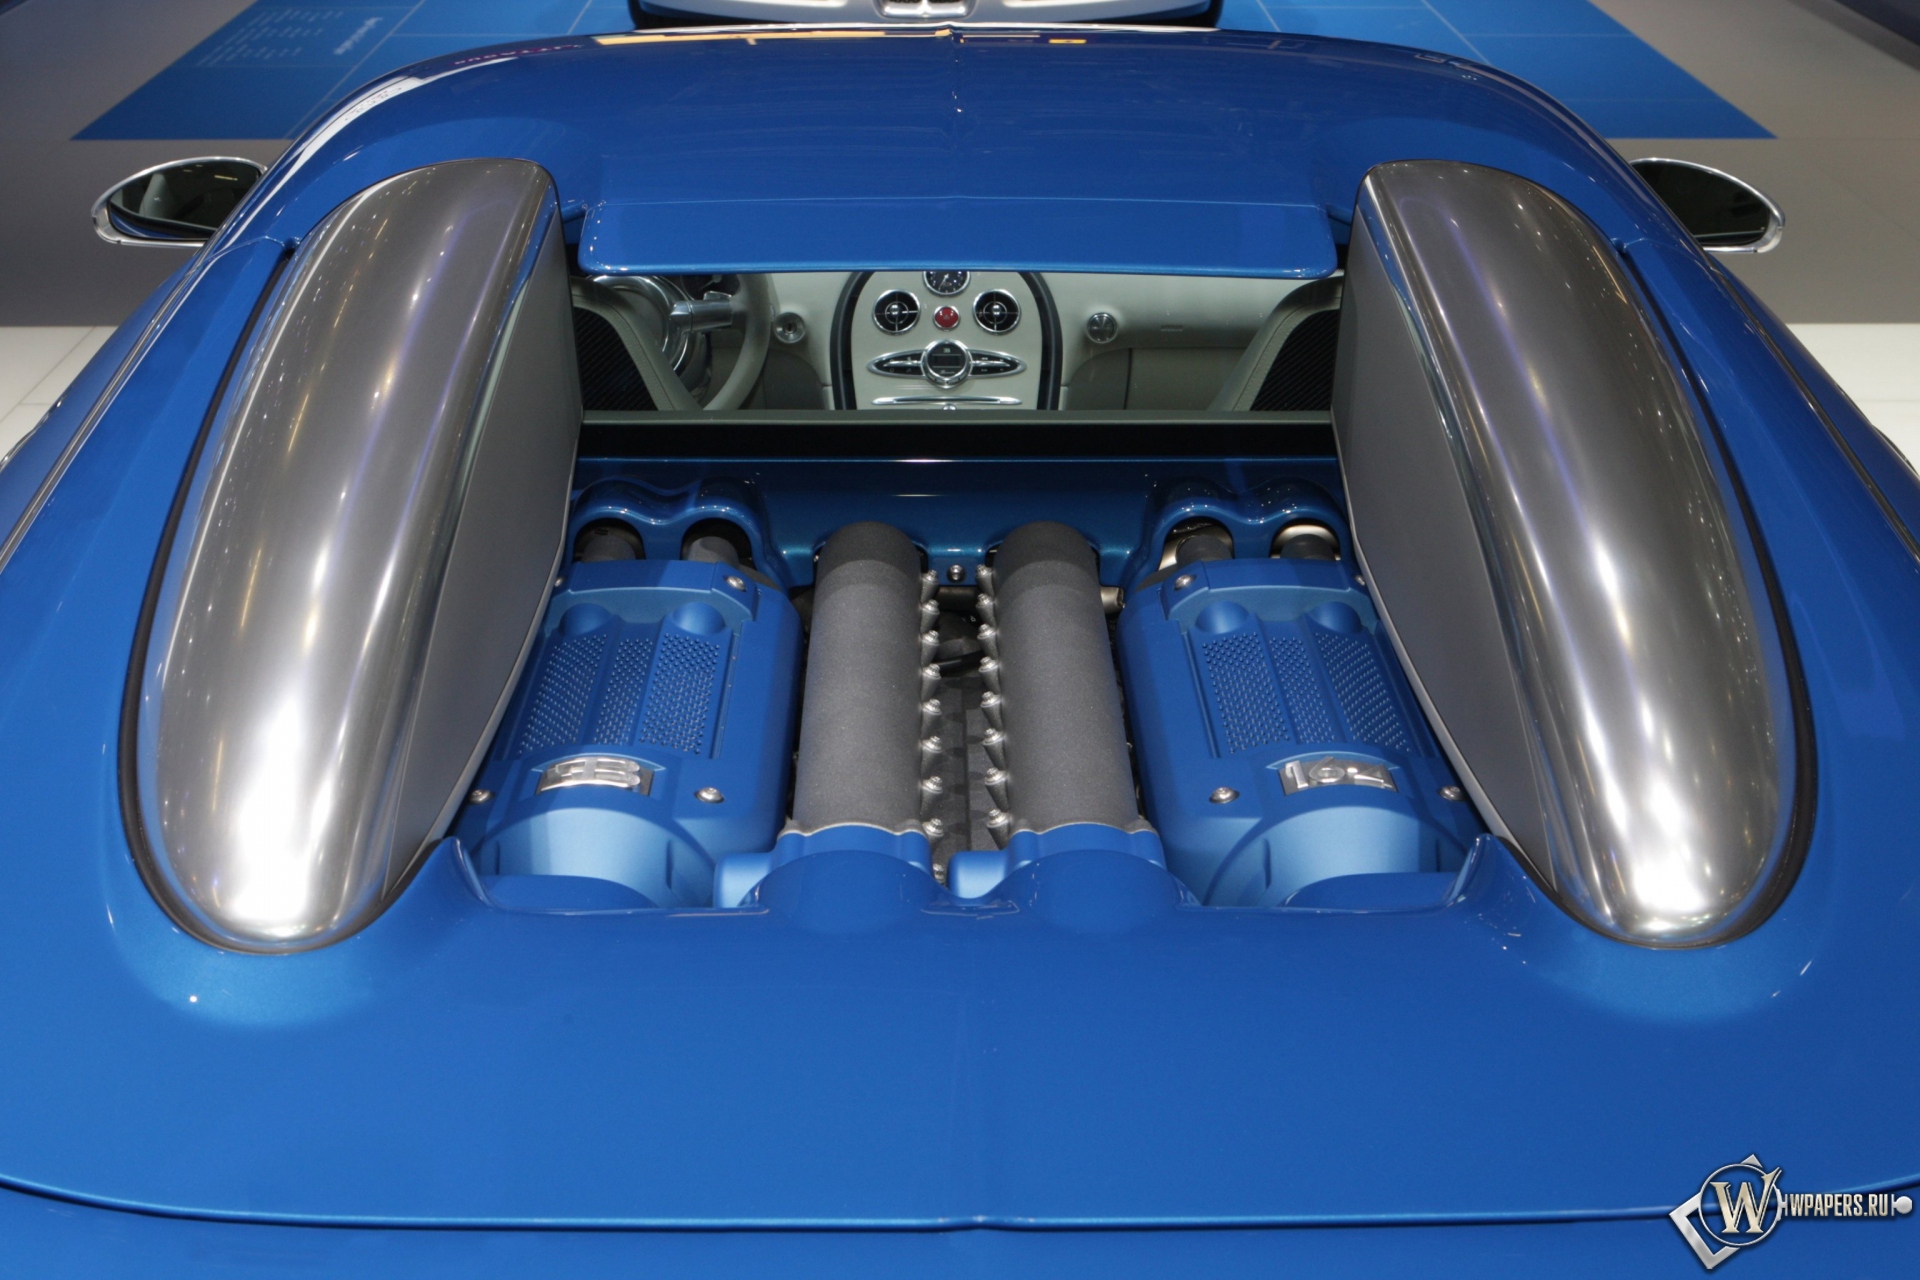 Bugatti Veyron Bleu Centenaire (2009) 1920x1280